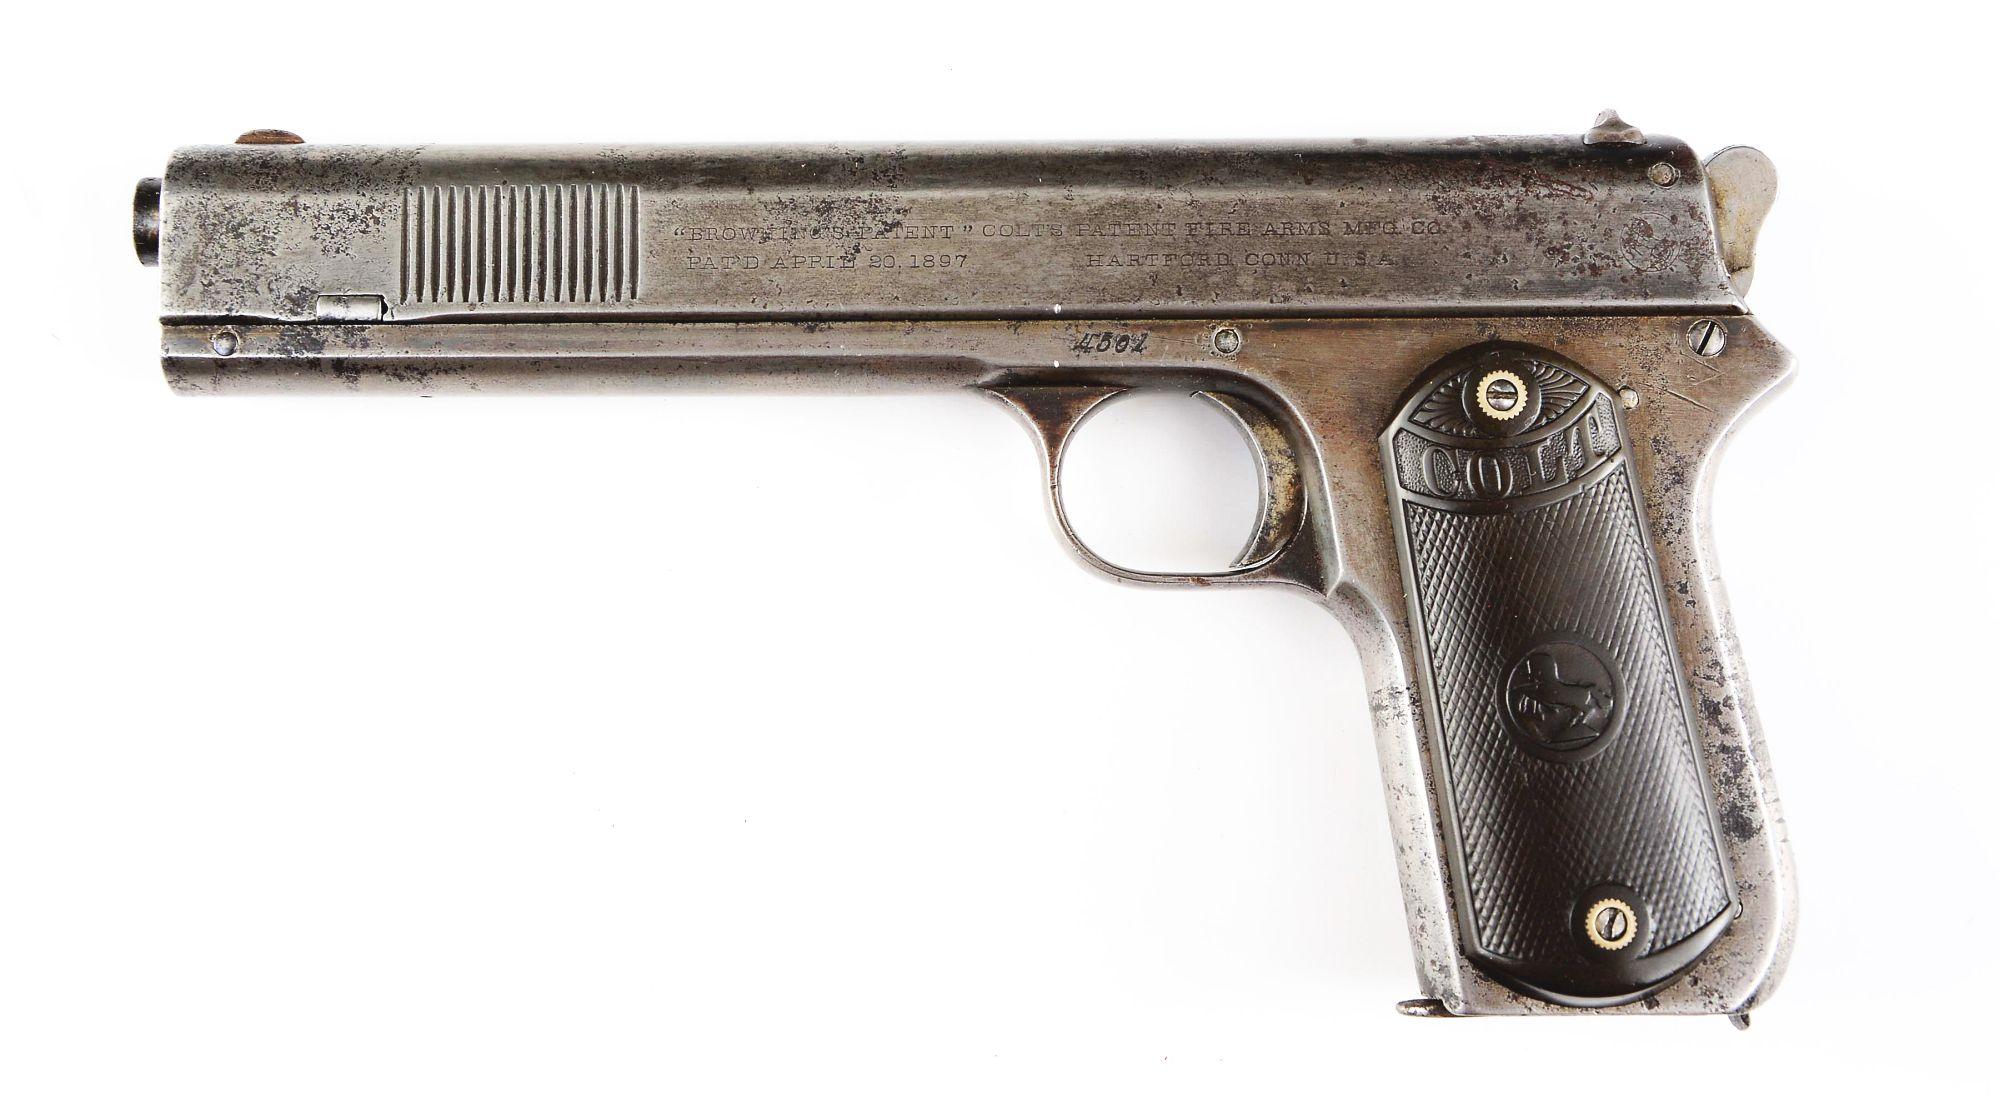 (C) Colt Sporting Model 1902 Long Slide Semi-Automatic Pistol (1902).